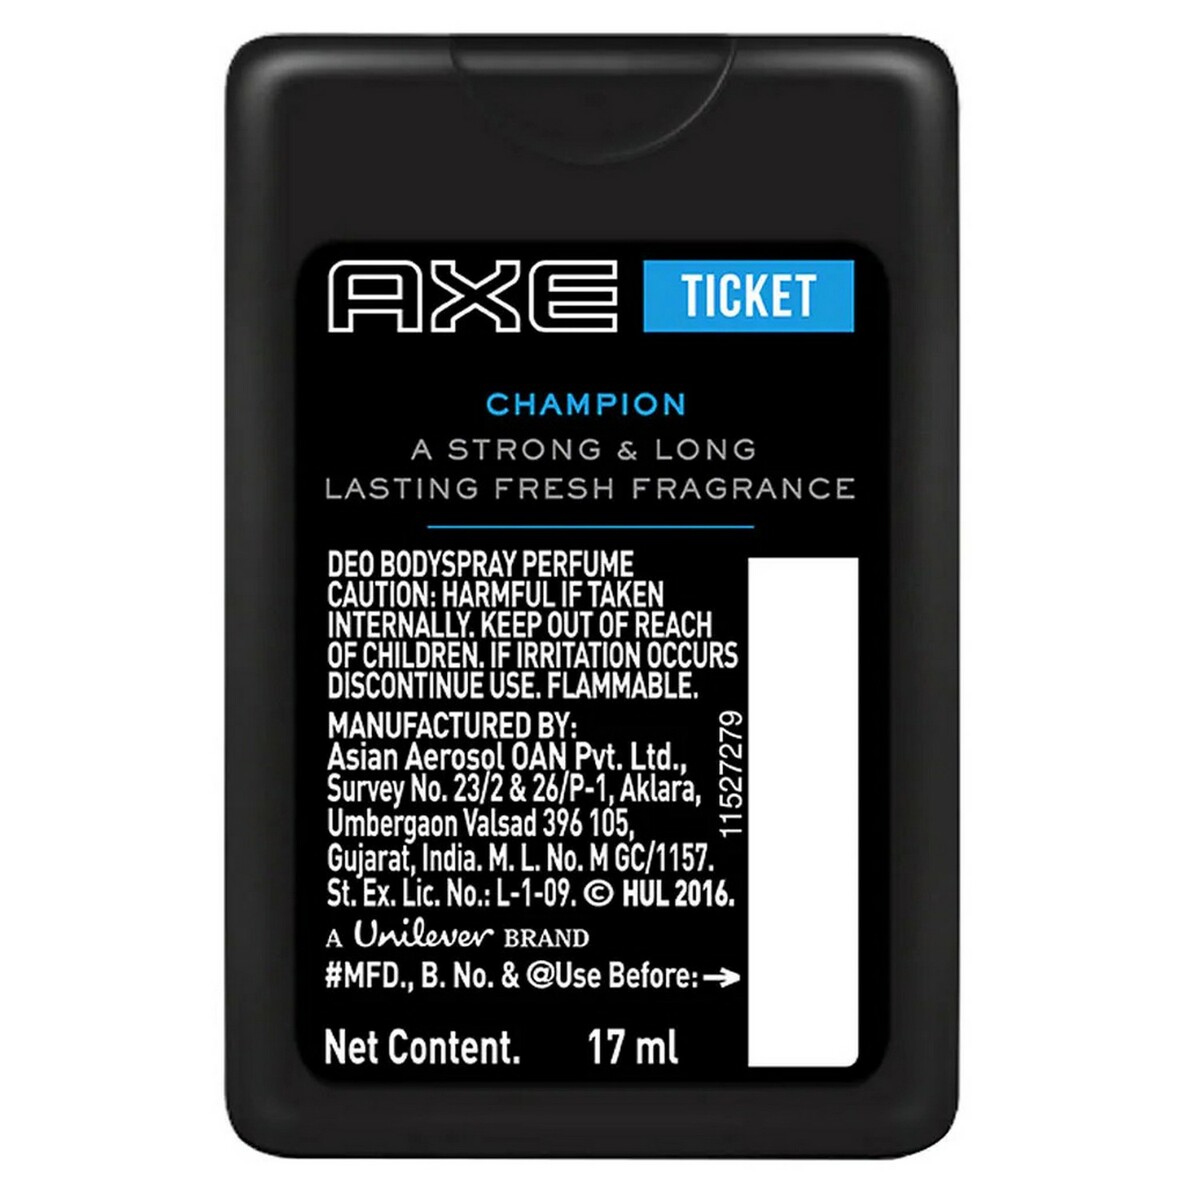 Axe Pocket Perfume Signature Champion Ticket 17ml